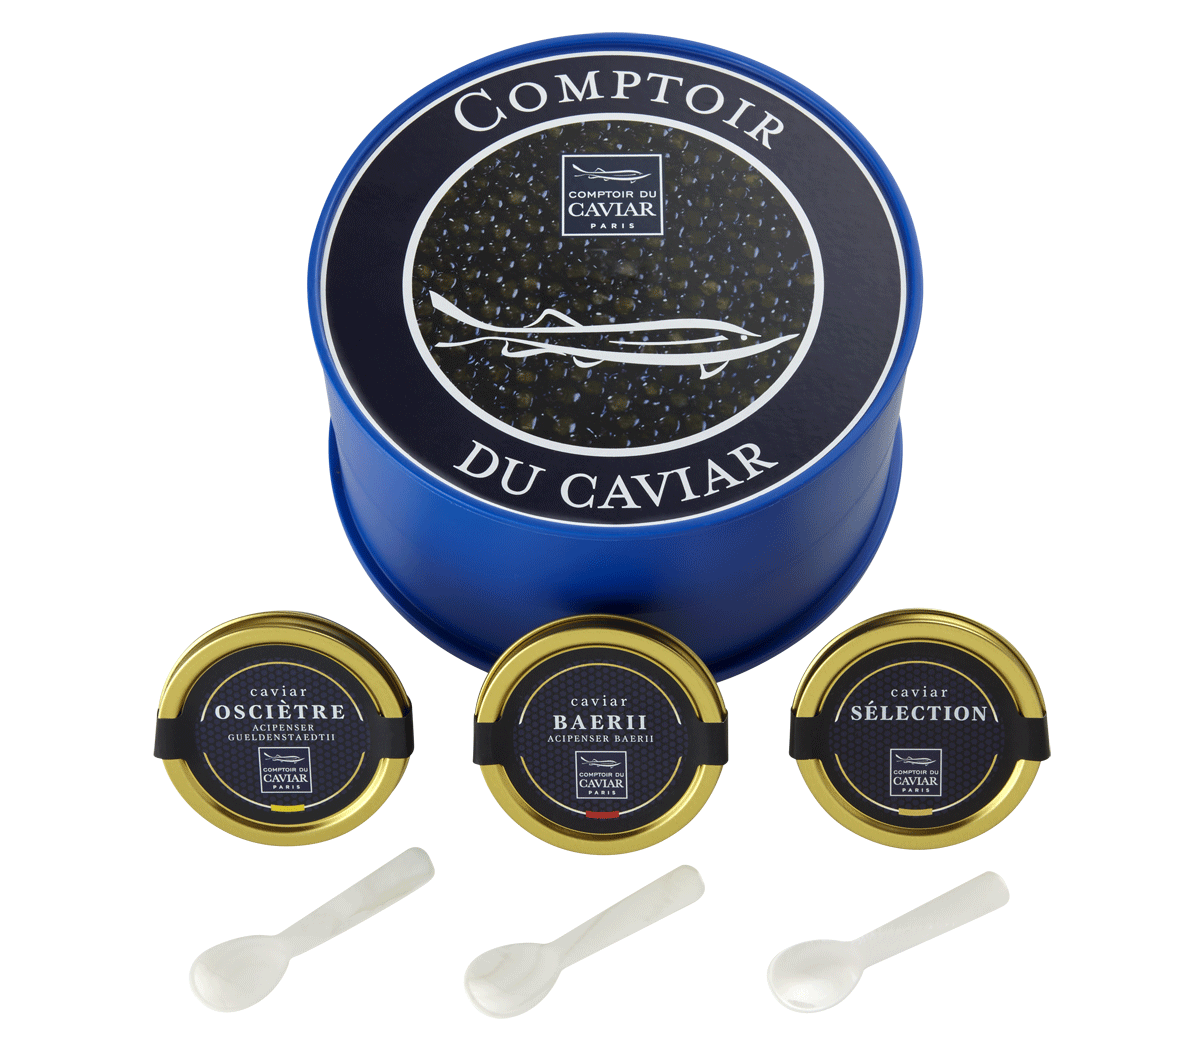 Comptoir du Caviar coffret cadeau